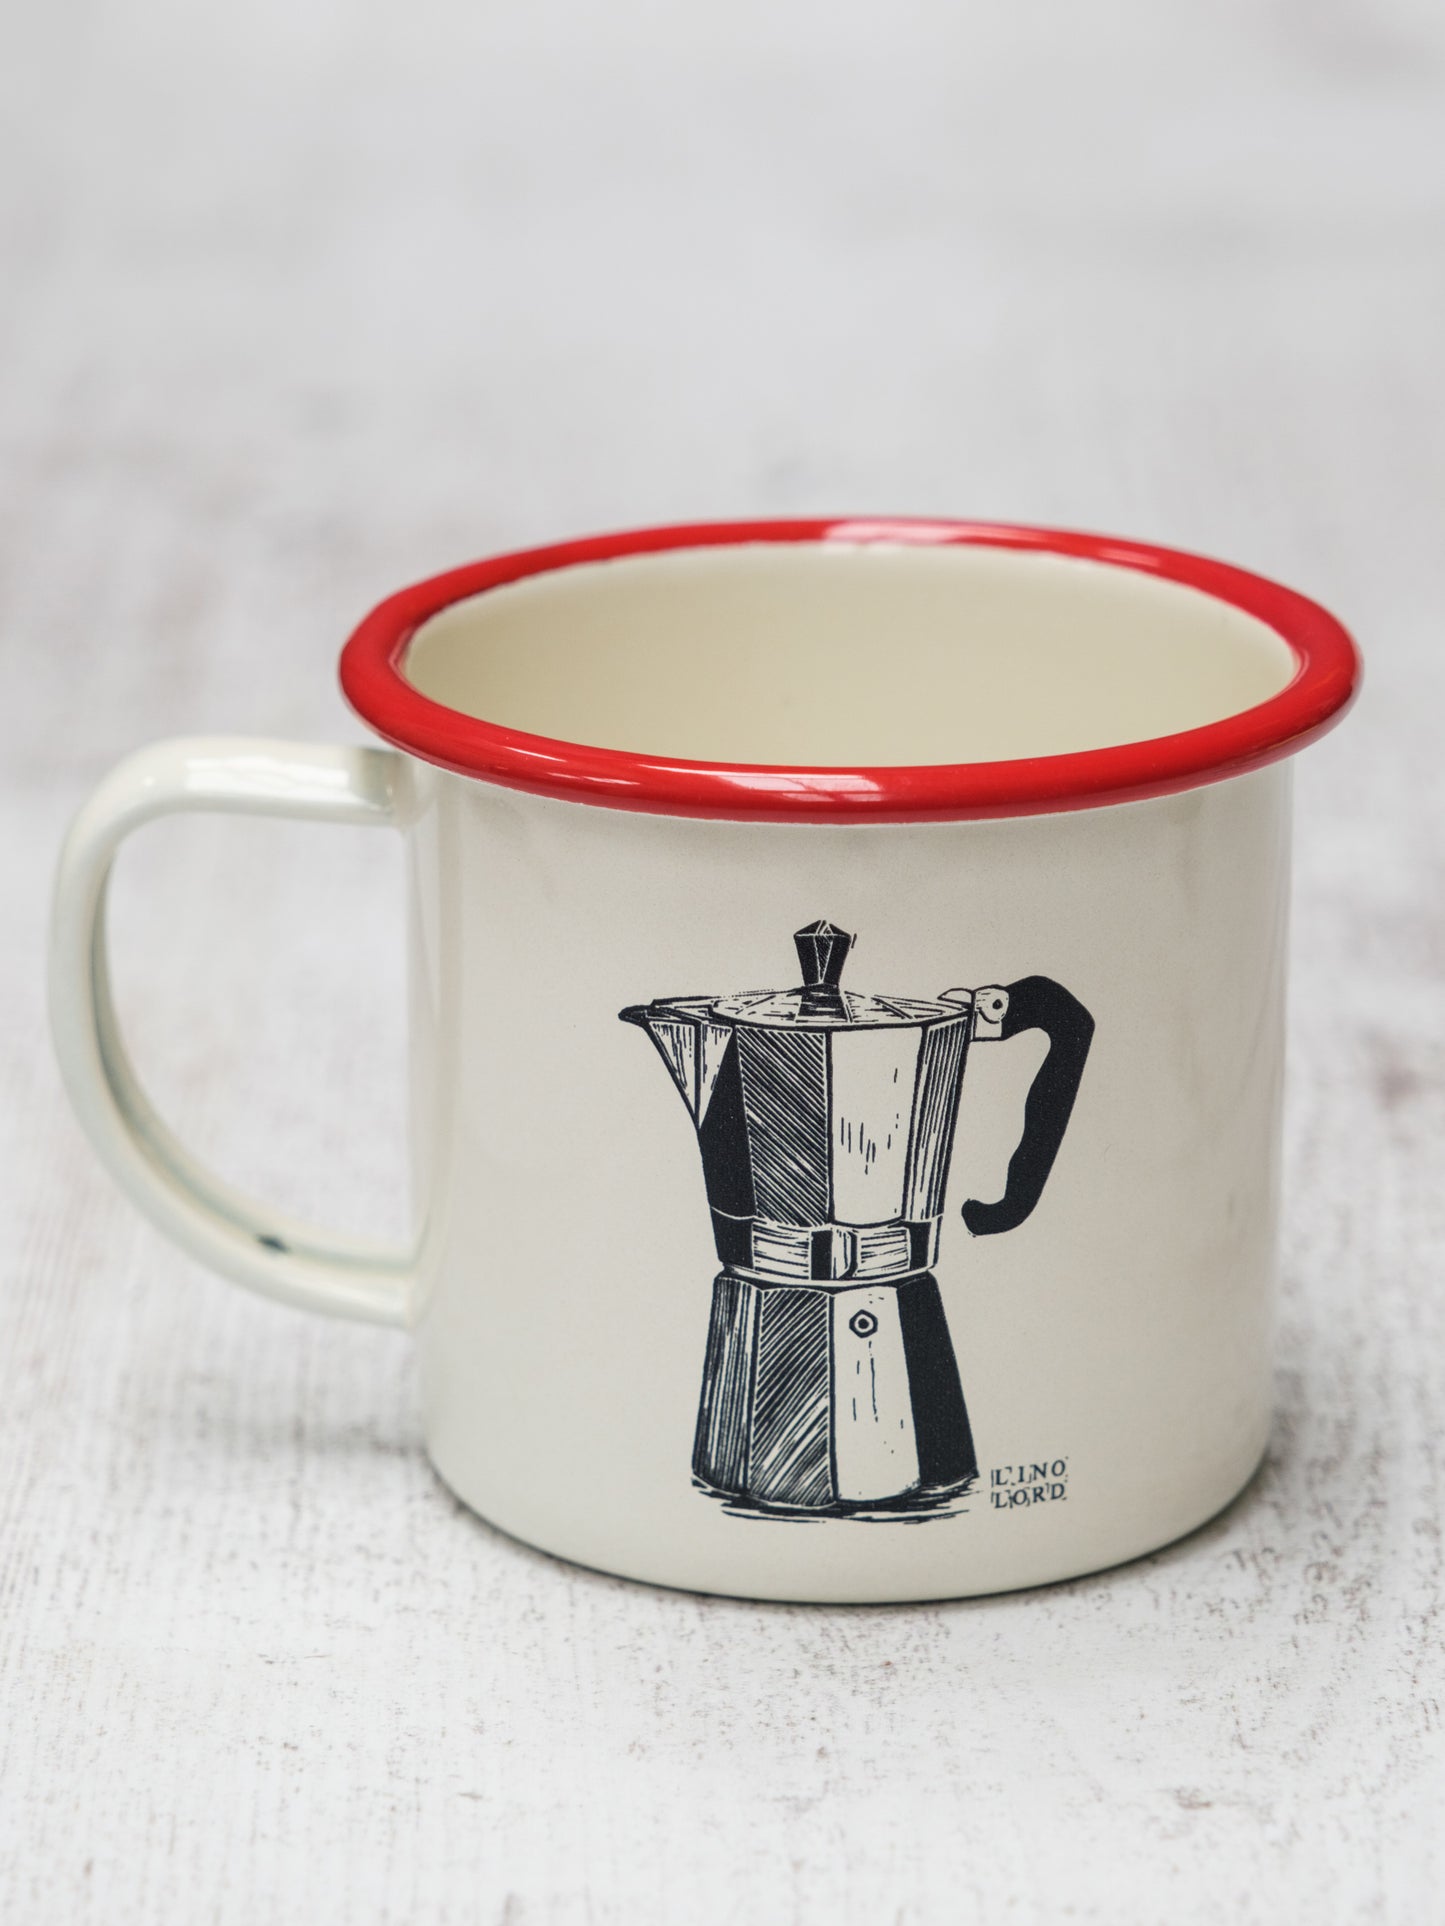 Cream Enamel Mug with Moka Pot Design